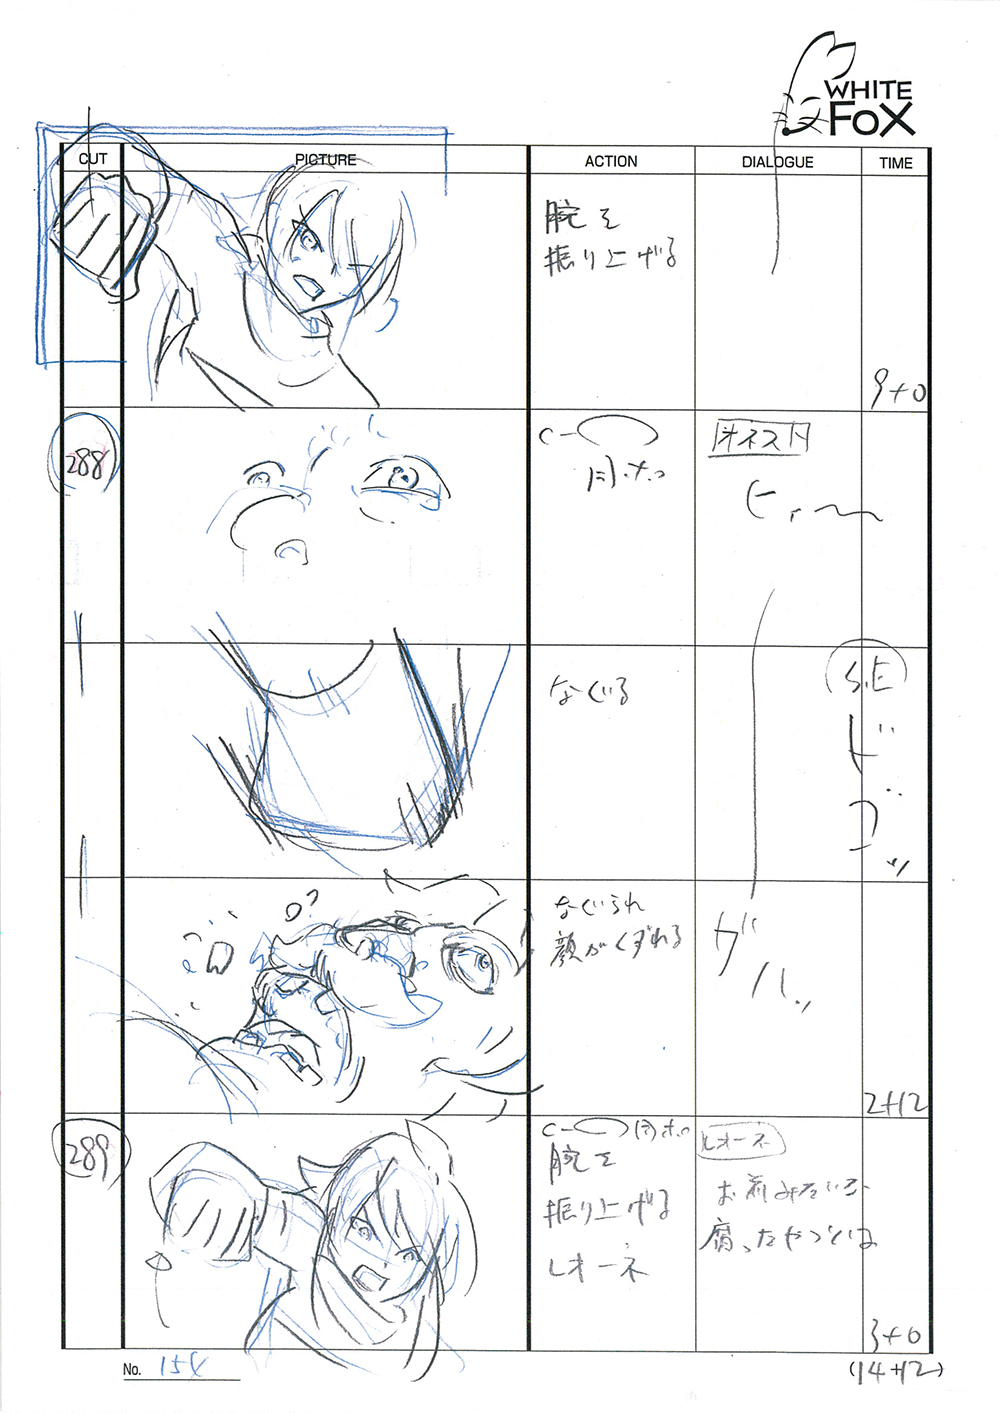 Akame ga Kill Episode 24 Storyboard Leak 159